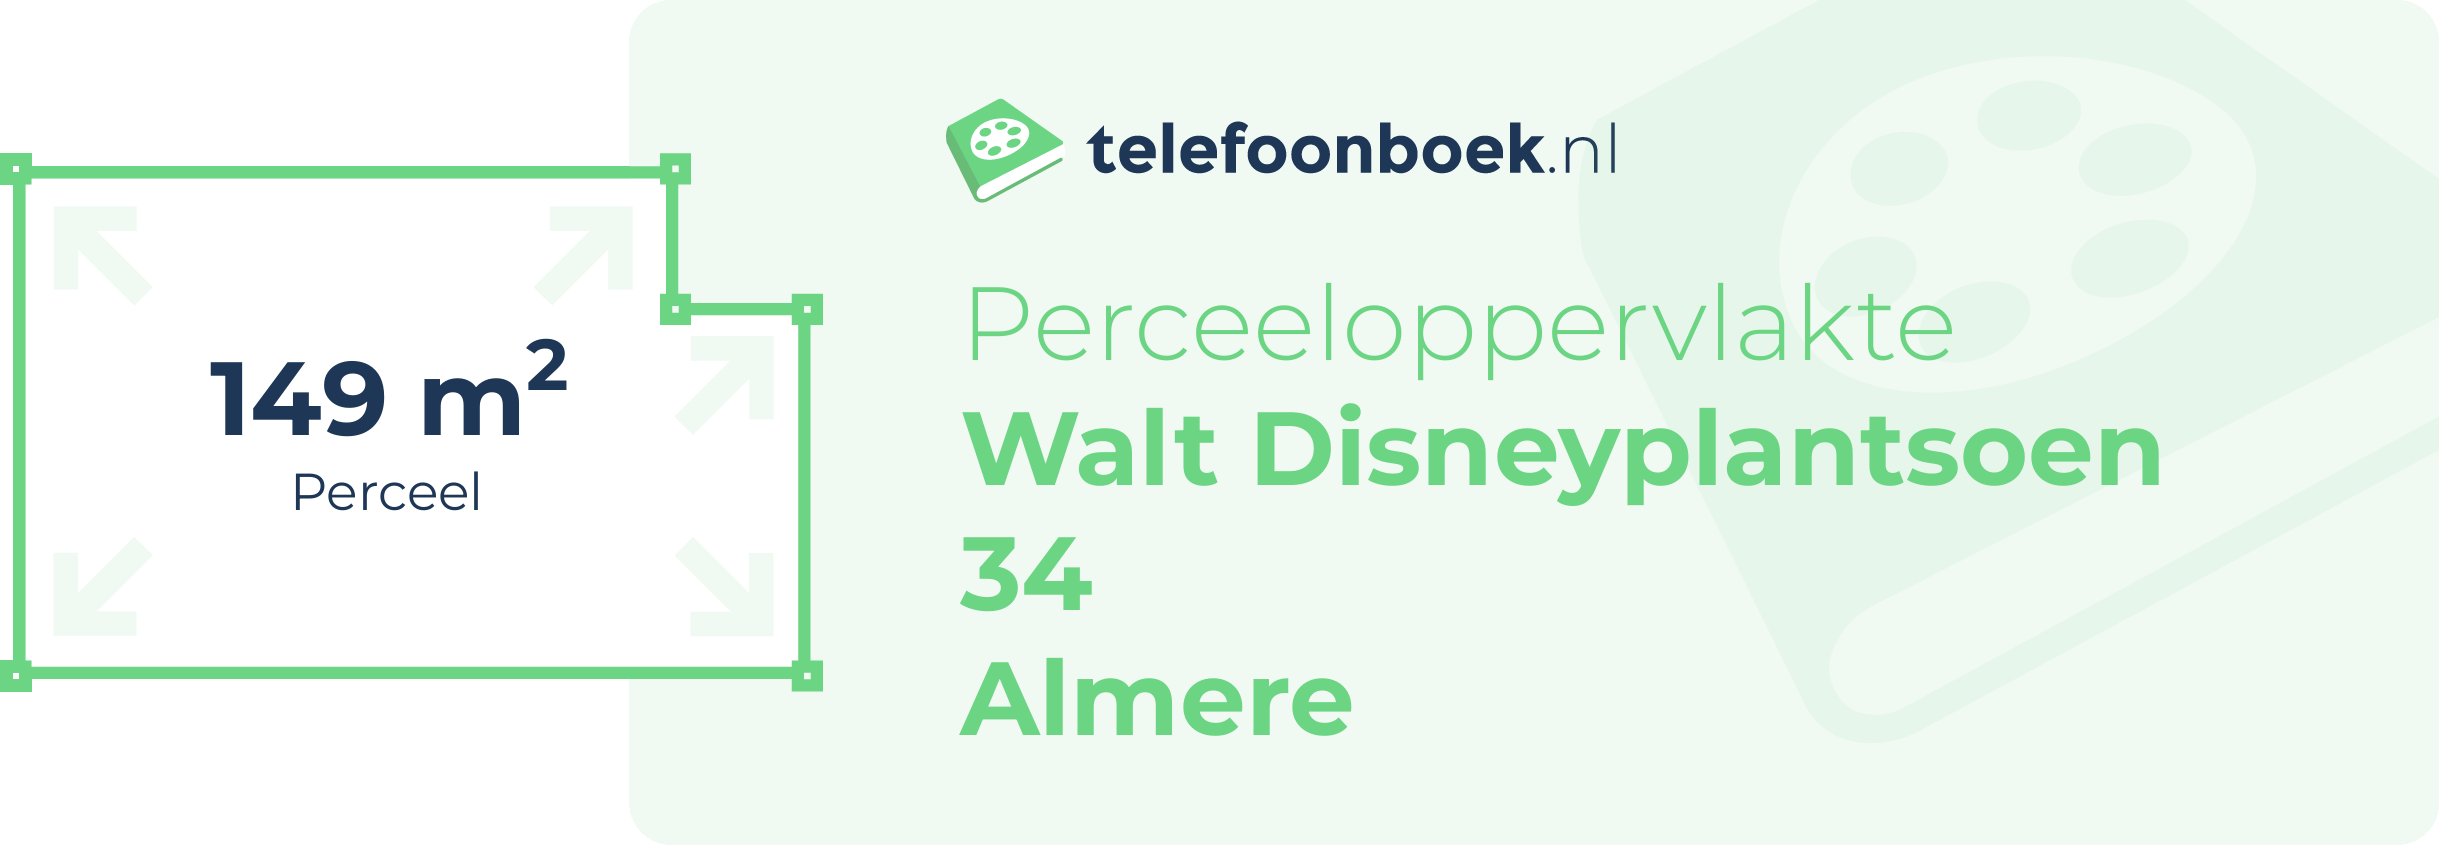 Perceeloppervlakte Walt Disneyplantsoen 34 Almere